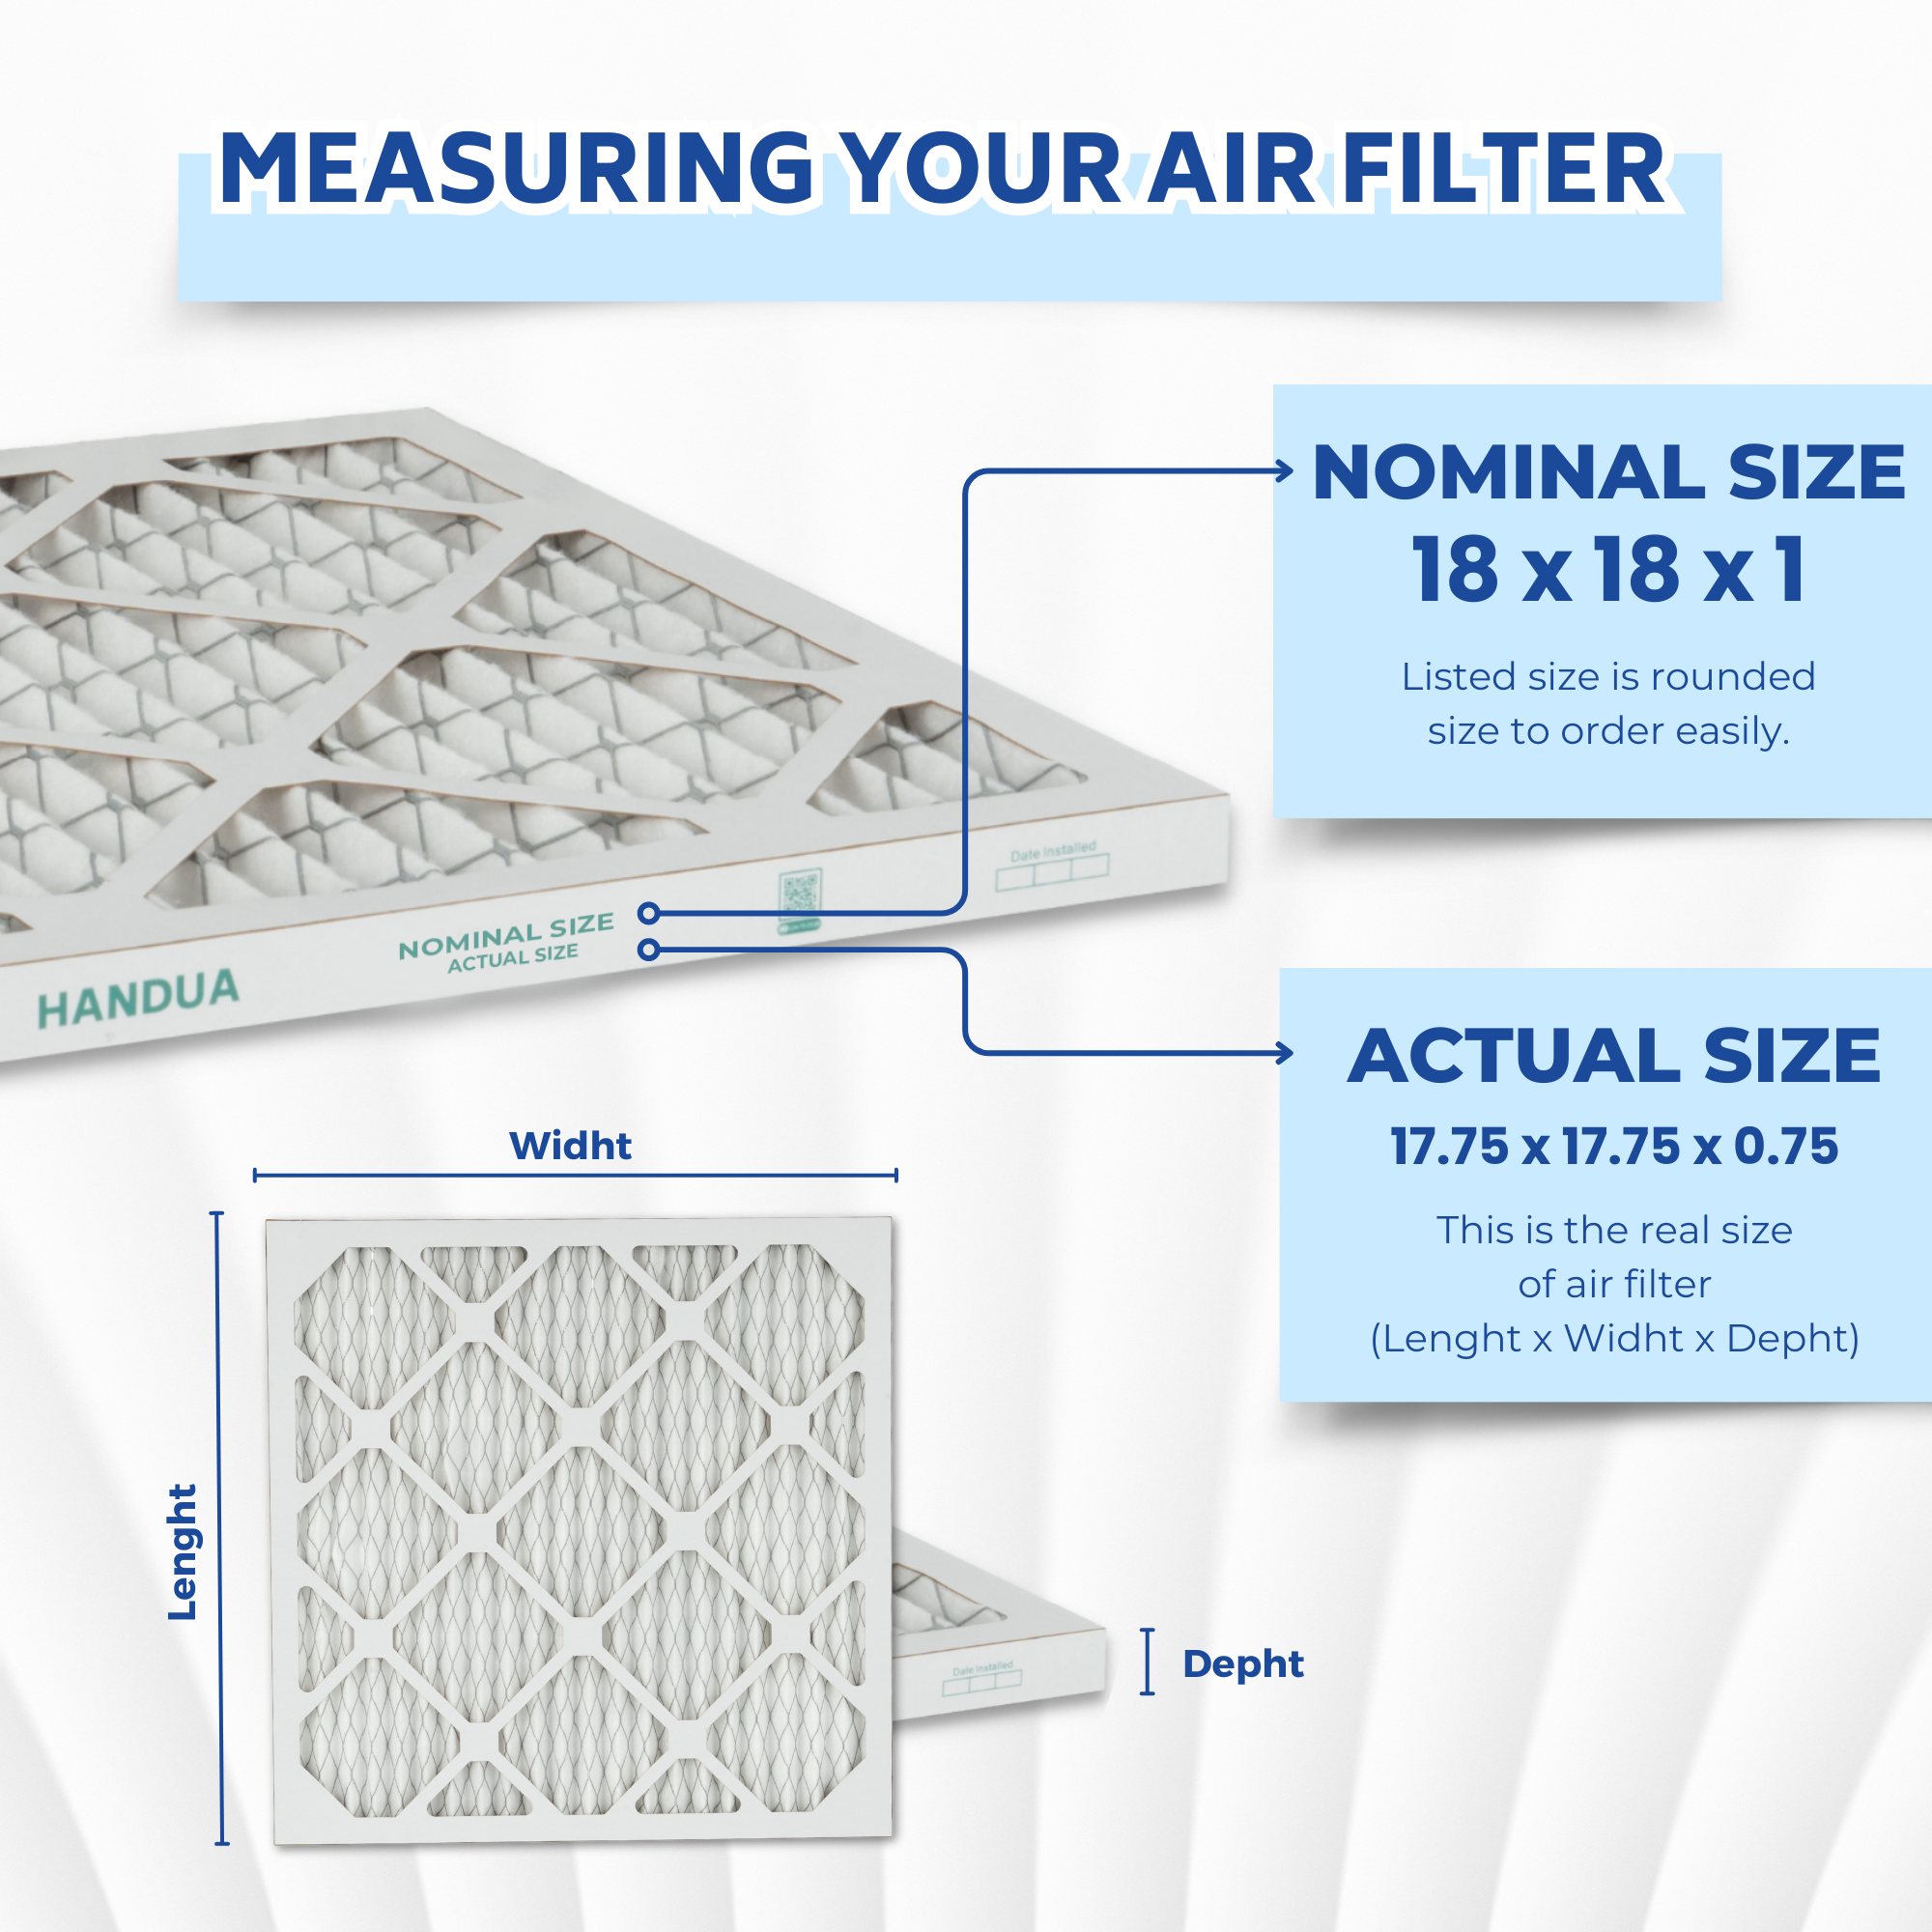 Handua 18x18x1 Air Filter MERV 11 Allergen Control, Plated Furnace AC Air Replacement Filter, 4 Pack (Actual Size: 17.75" x 17.75" x 0.75")